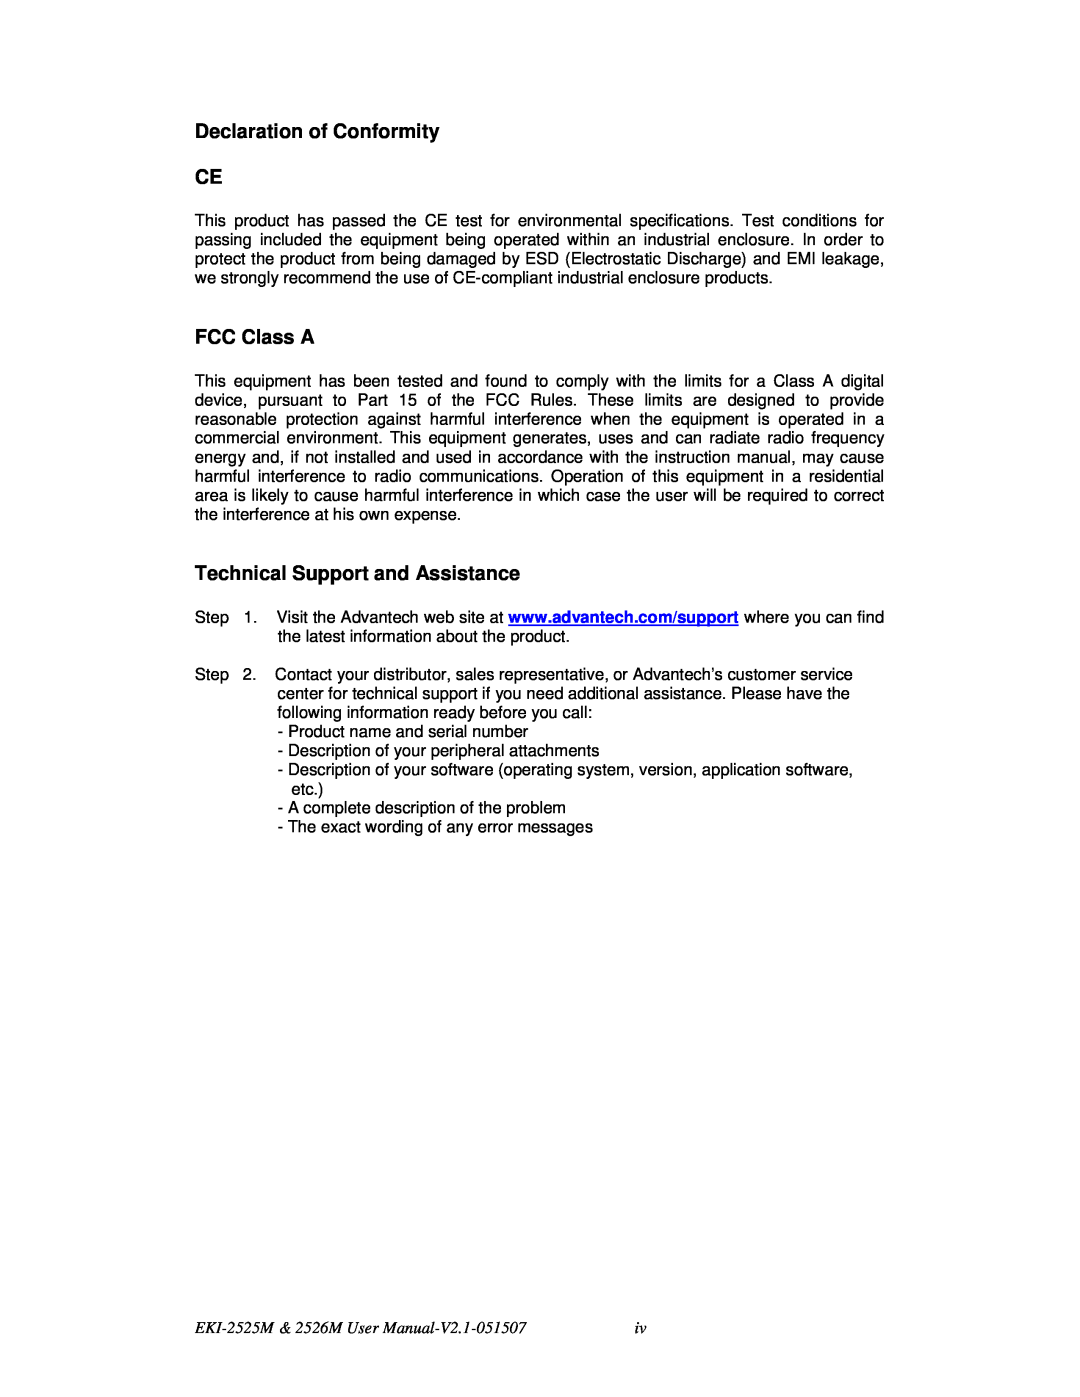 Advantech EKI-2526M, EKI-2525M user manual Declaration of Conformity CE, FCC Class A, Technical Support and Assistance 